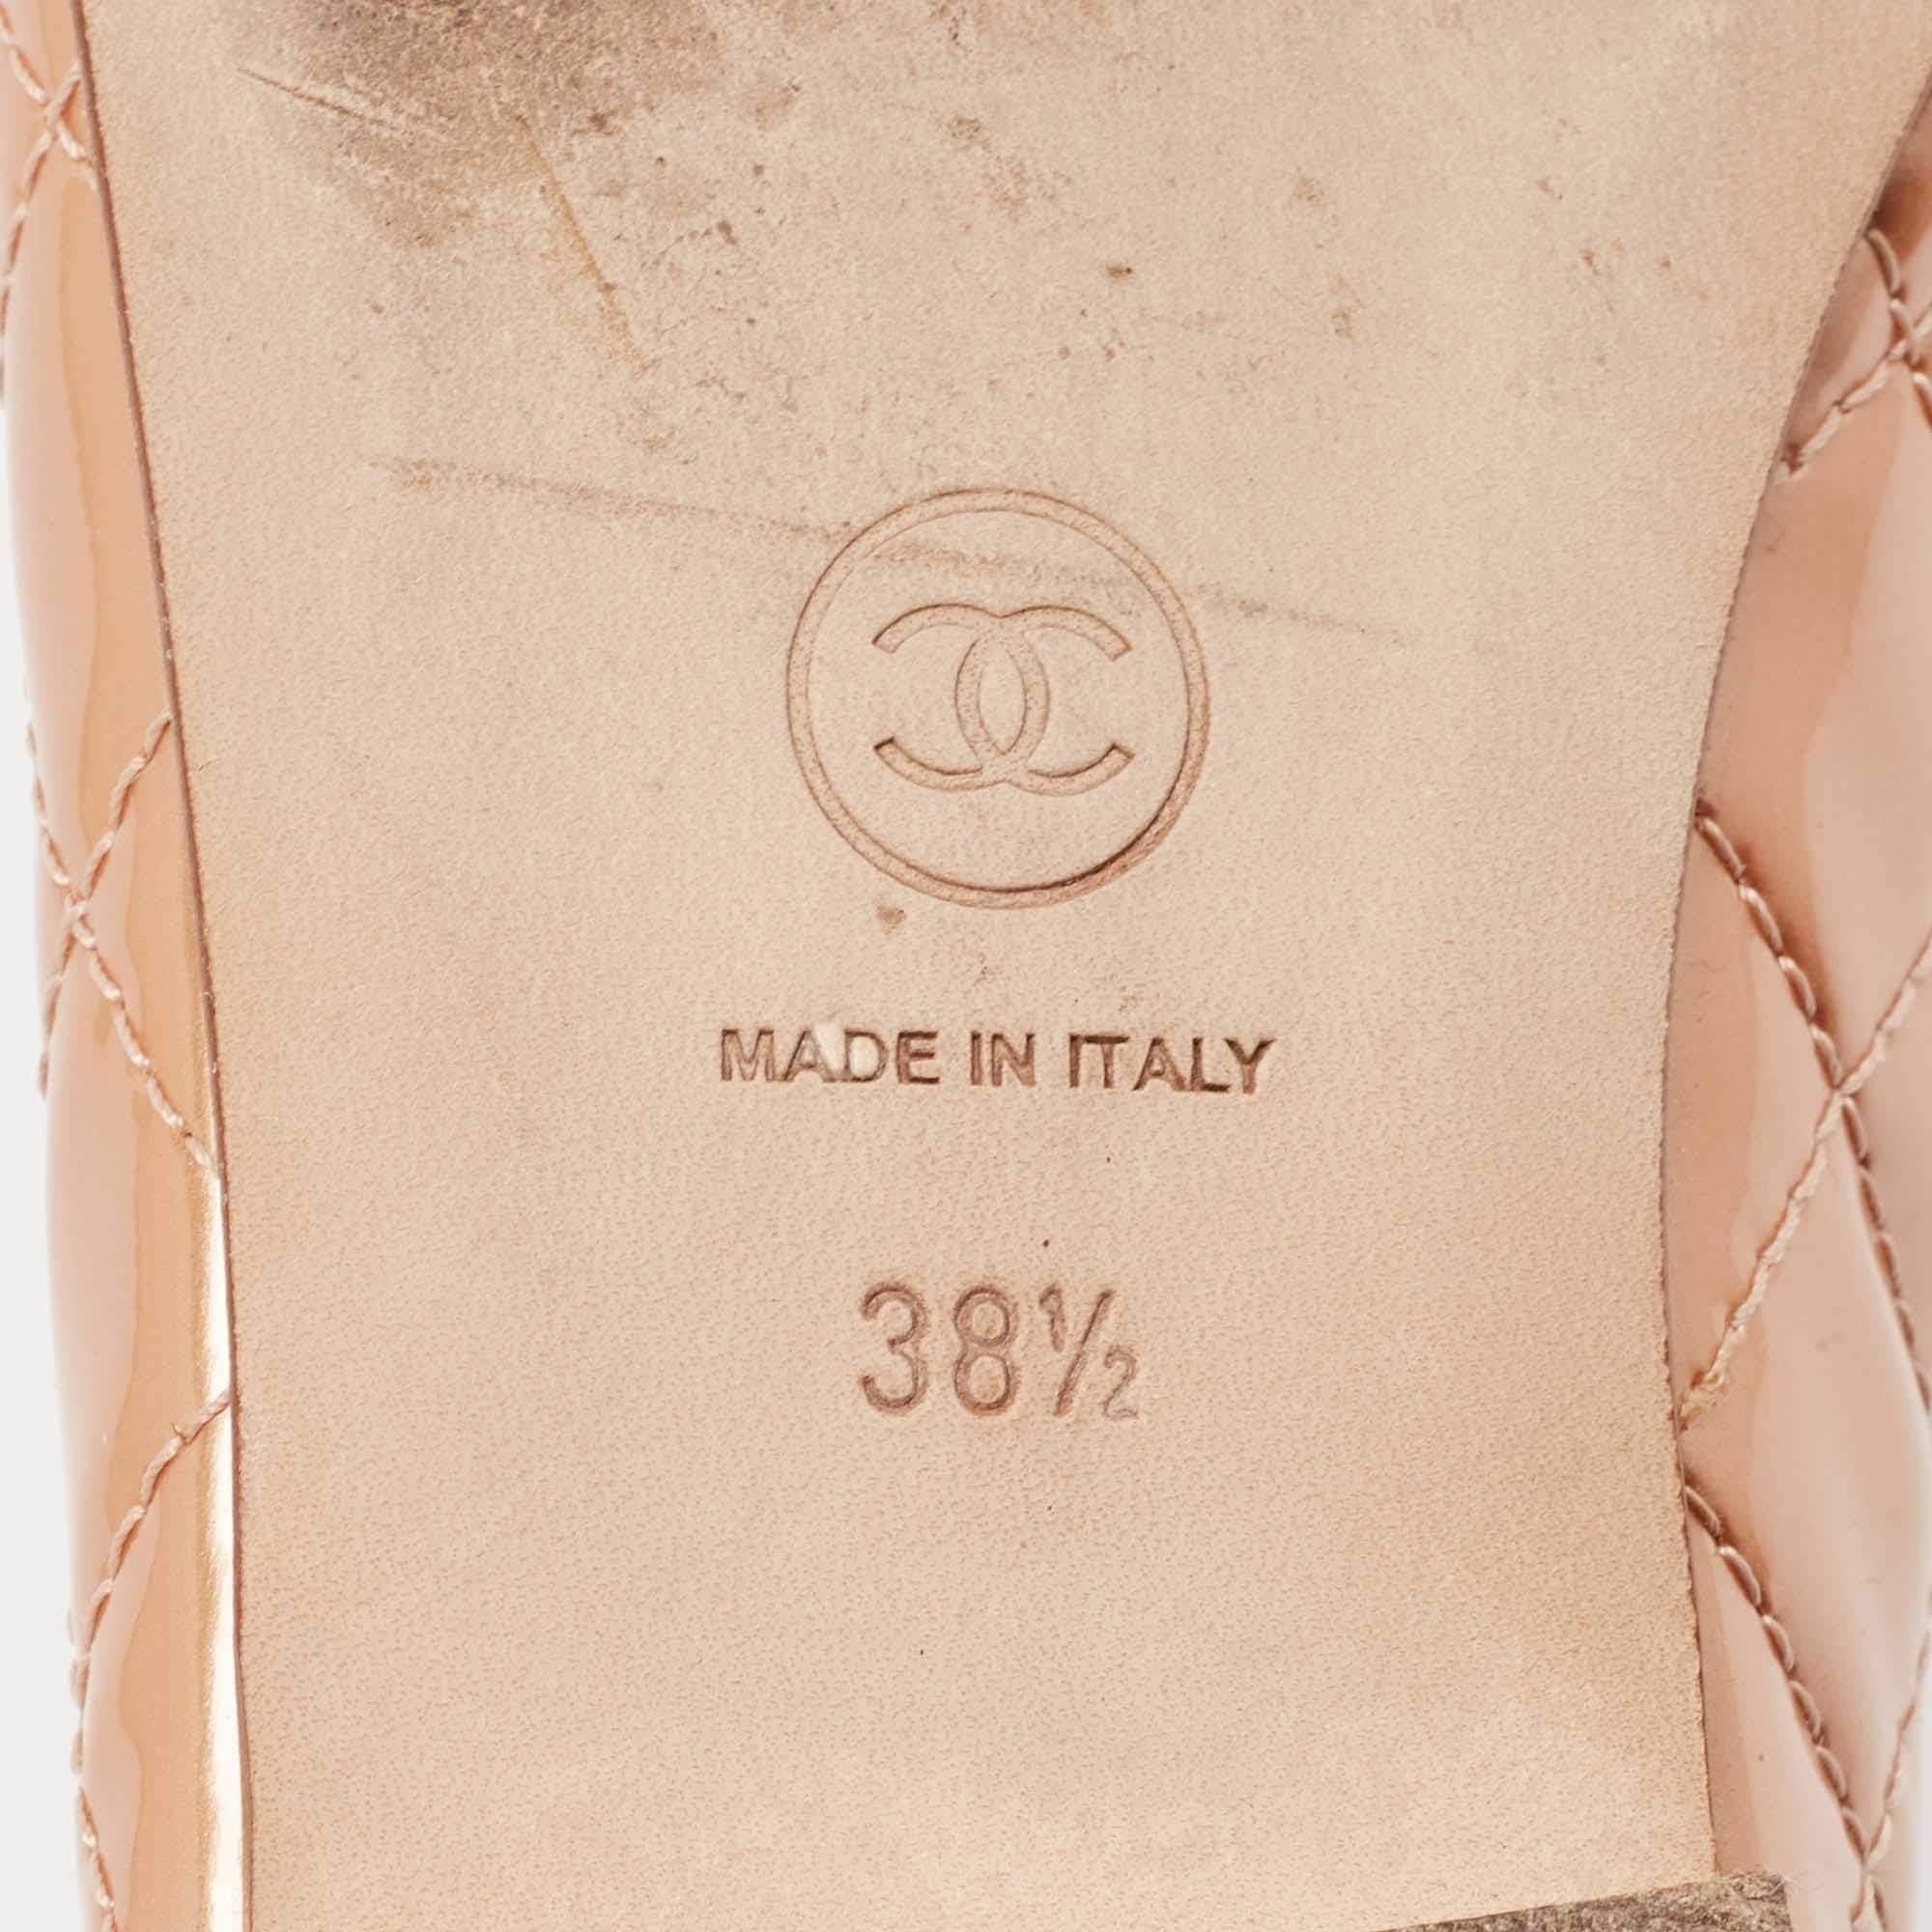 Chanel Gold Patent CC Cap Toe Ballet Flats Size 38.5 4